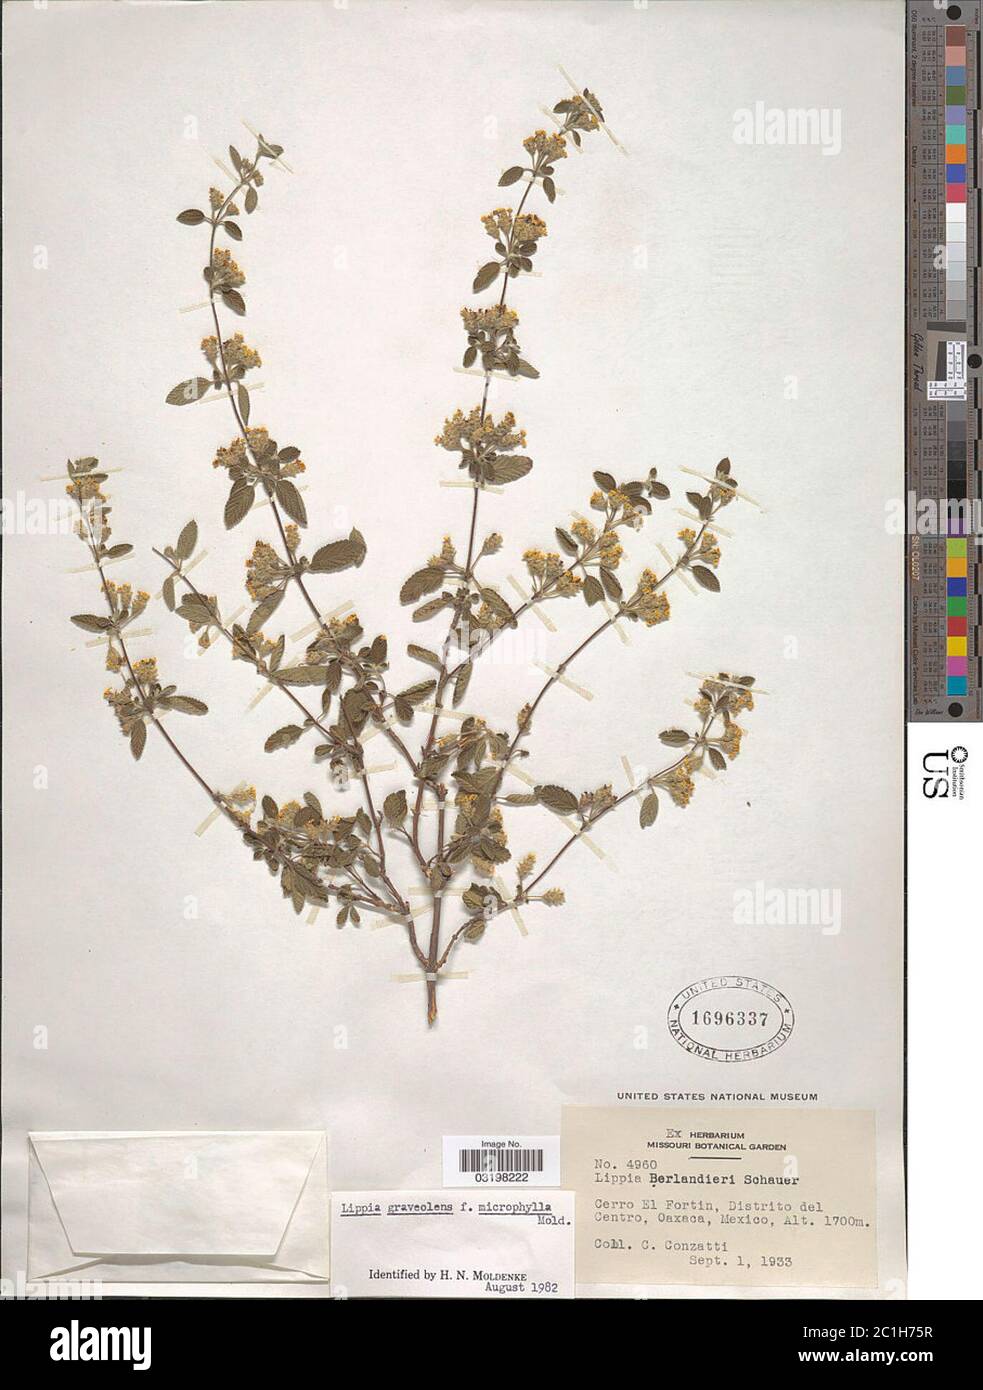 Lippia graveolens f microphylla Kunth Lippia graveolens f microphylla Kunth. Stock Photo